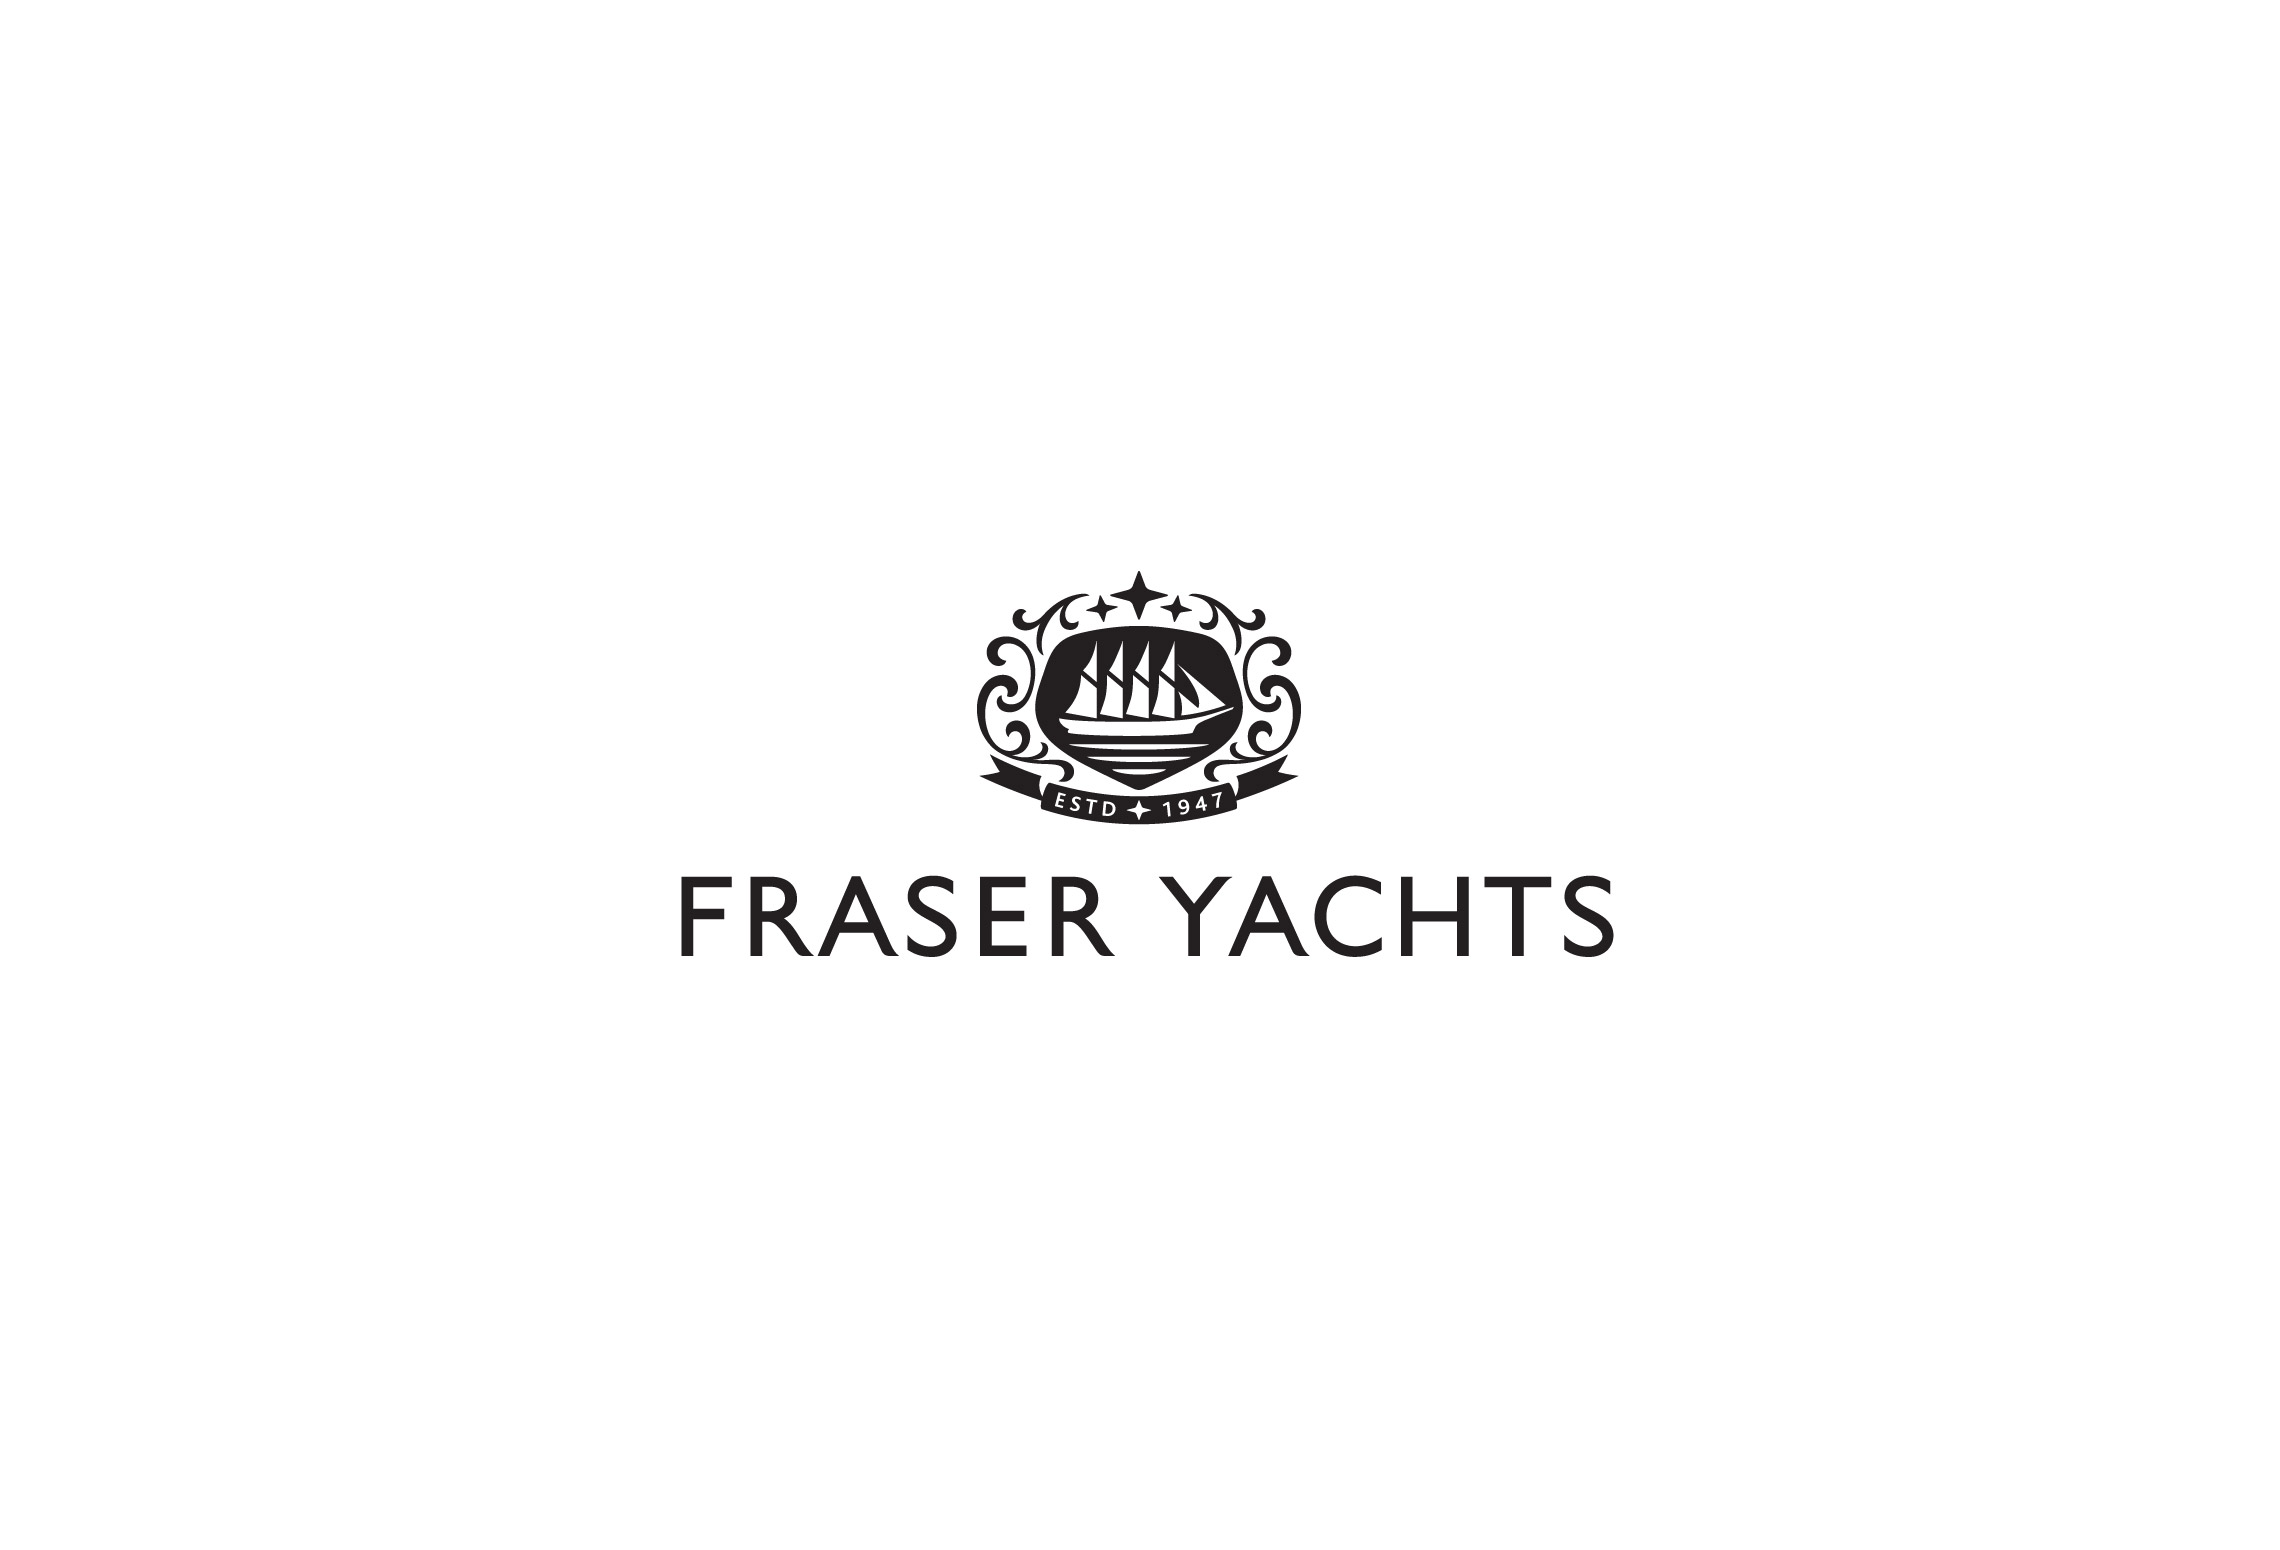 fraser yachts companies house